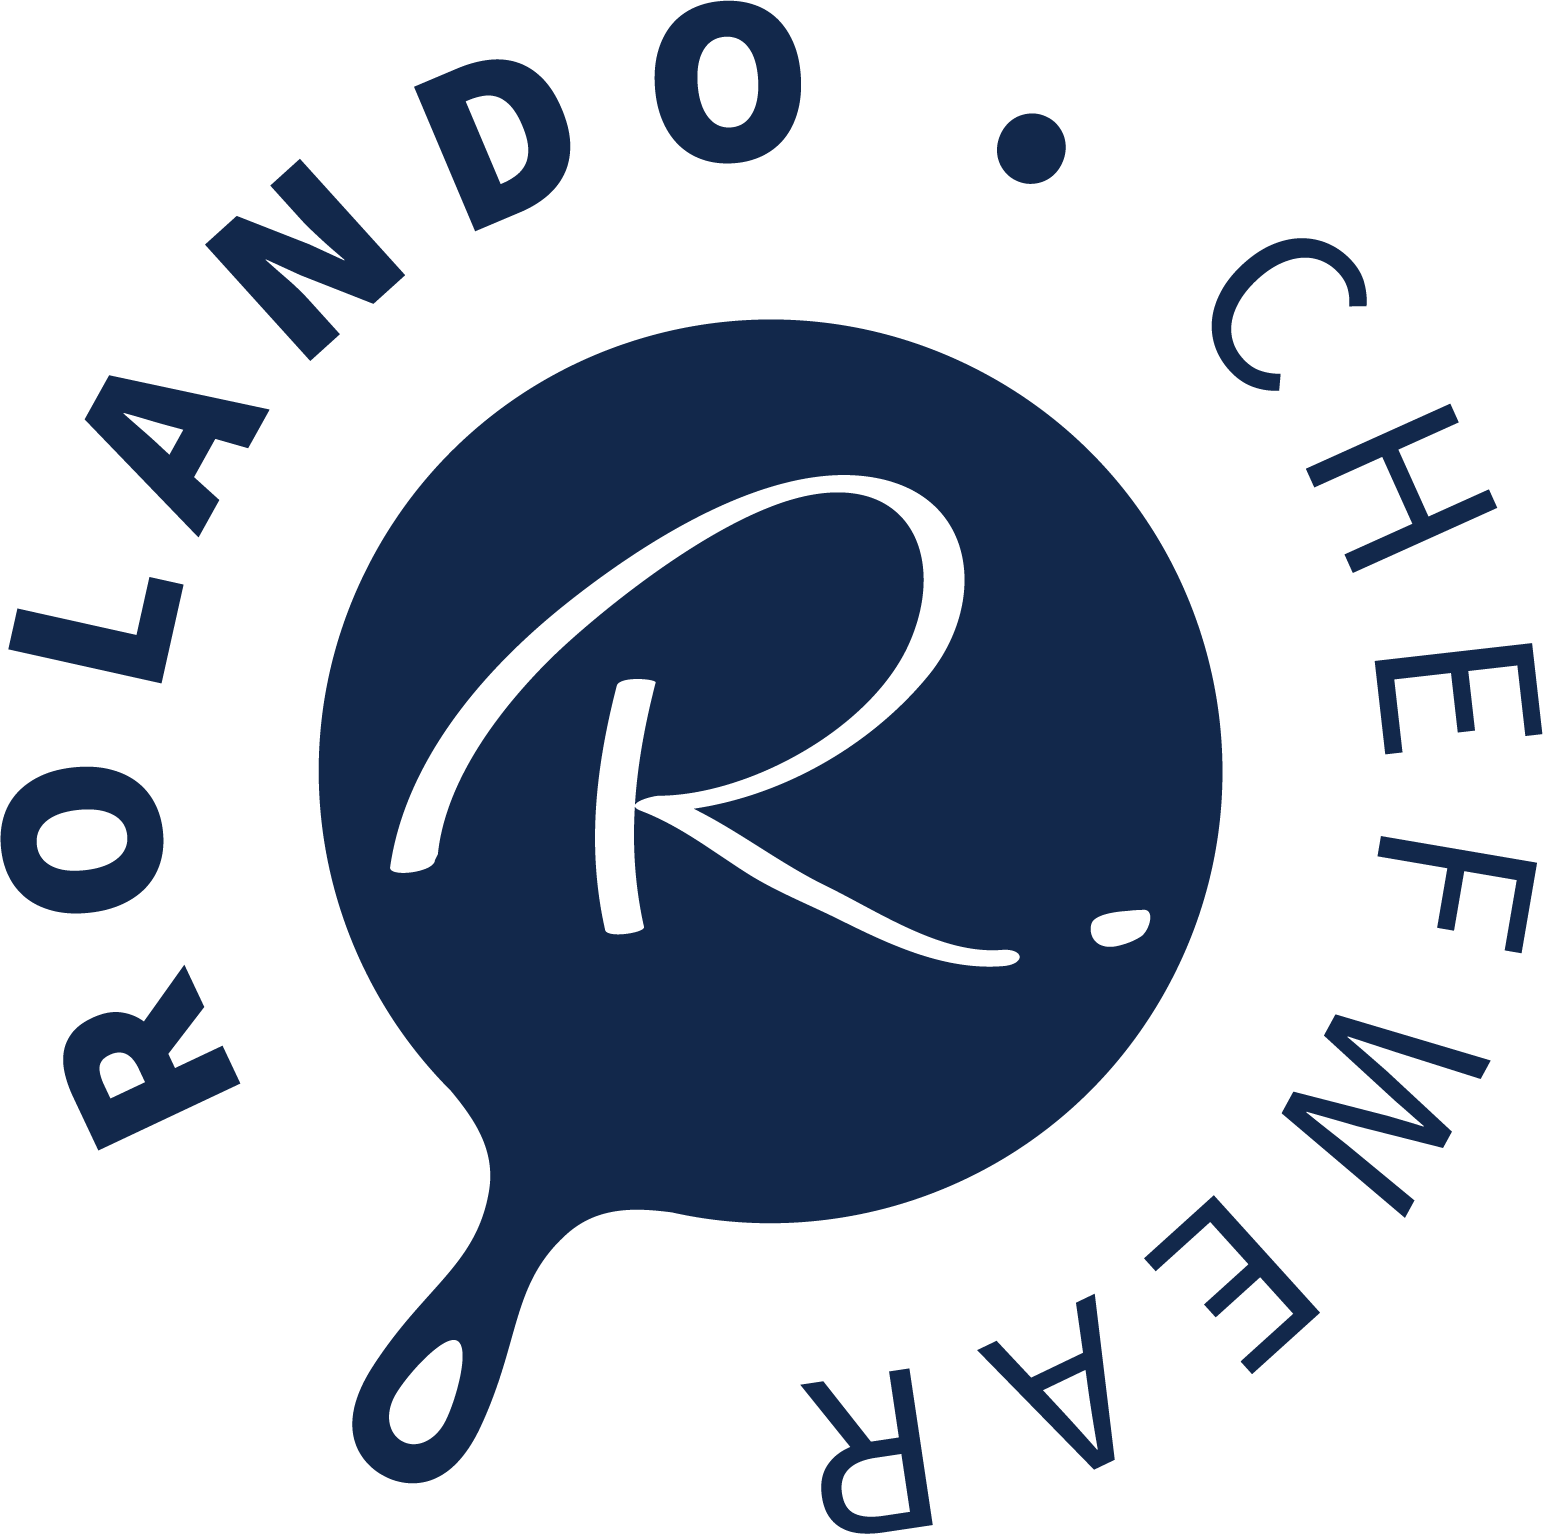 Rolando Chefwear